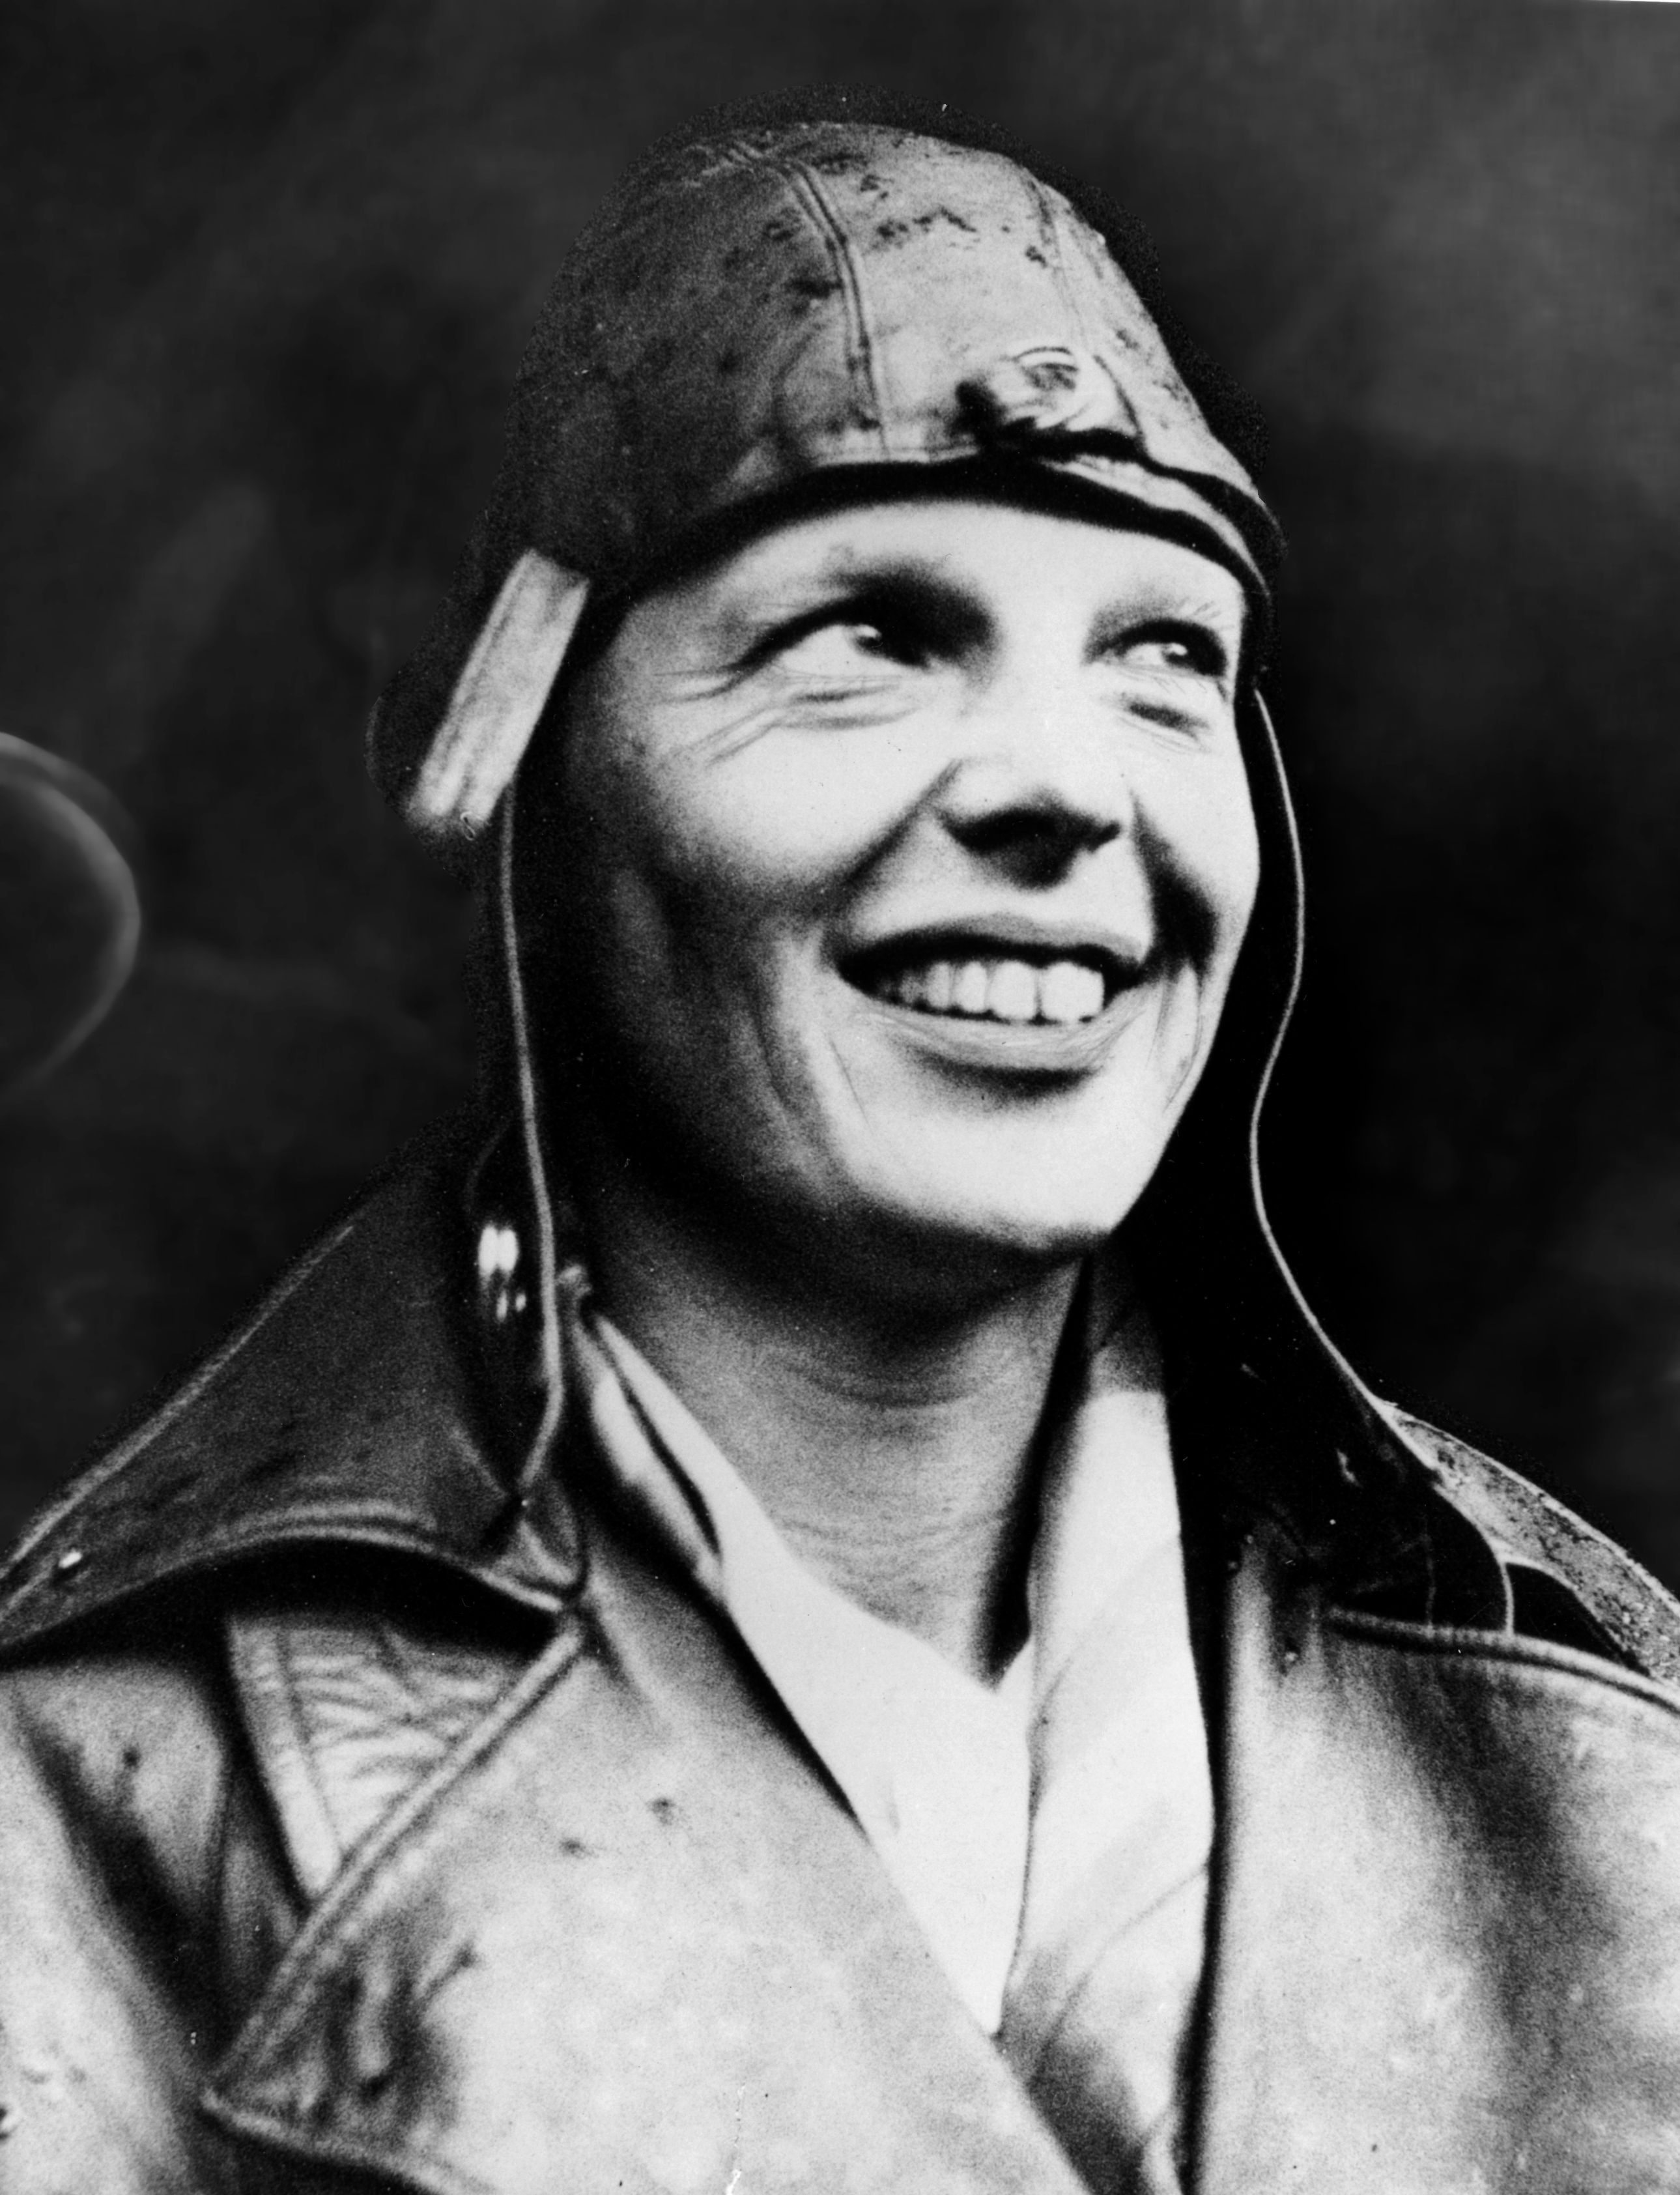 Aviation History | History of Flight | Aviation History Articles, Warbirds, Bombers, Trainers, Pilots | Amelia Earhart